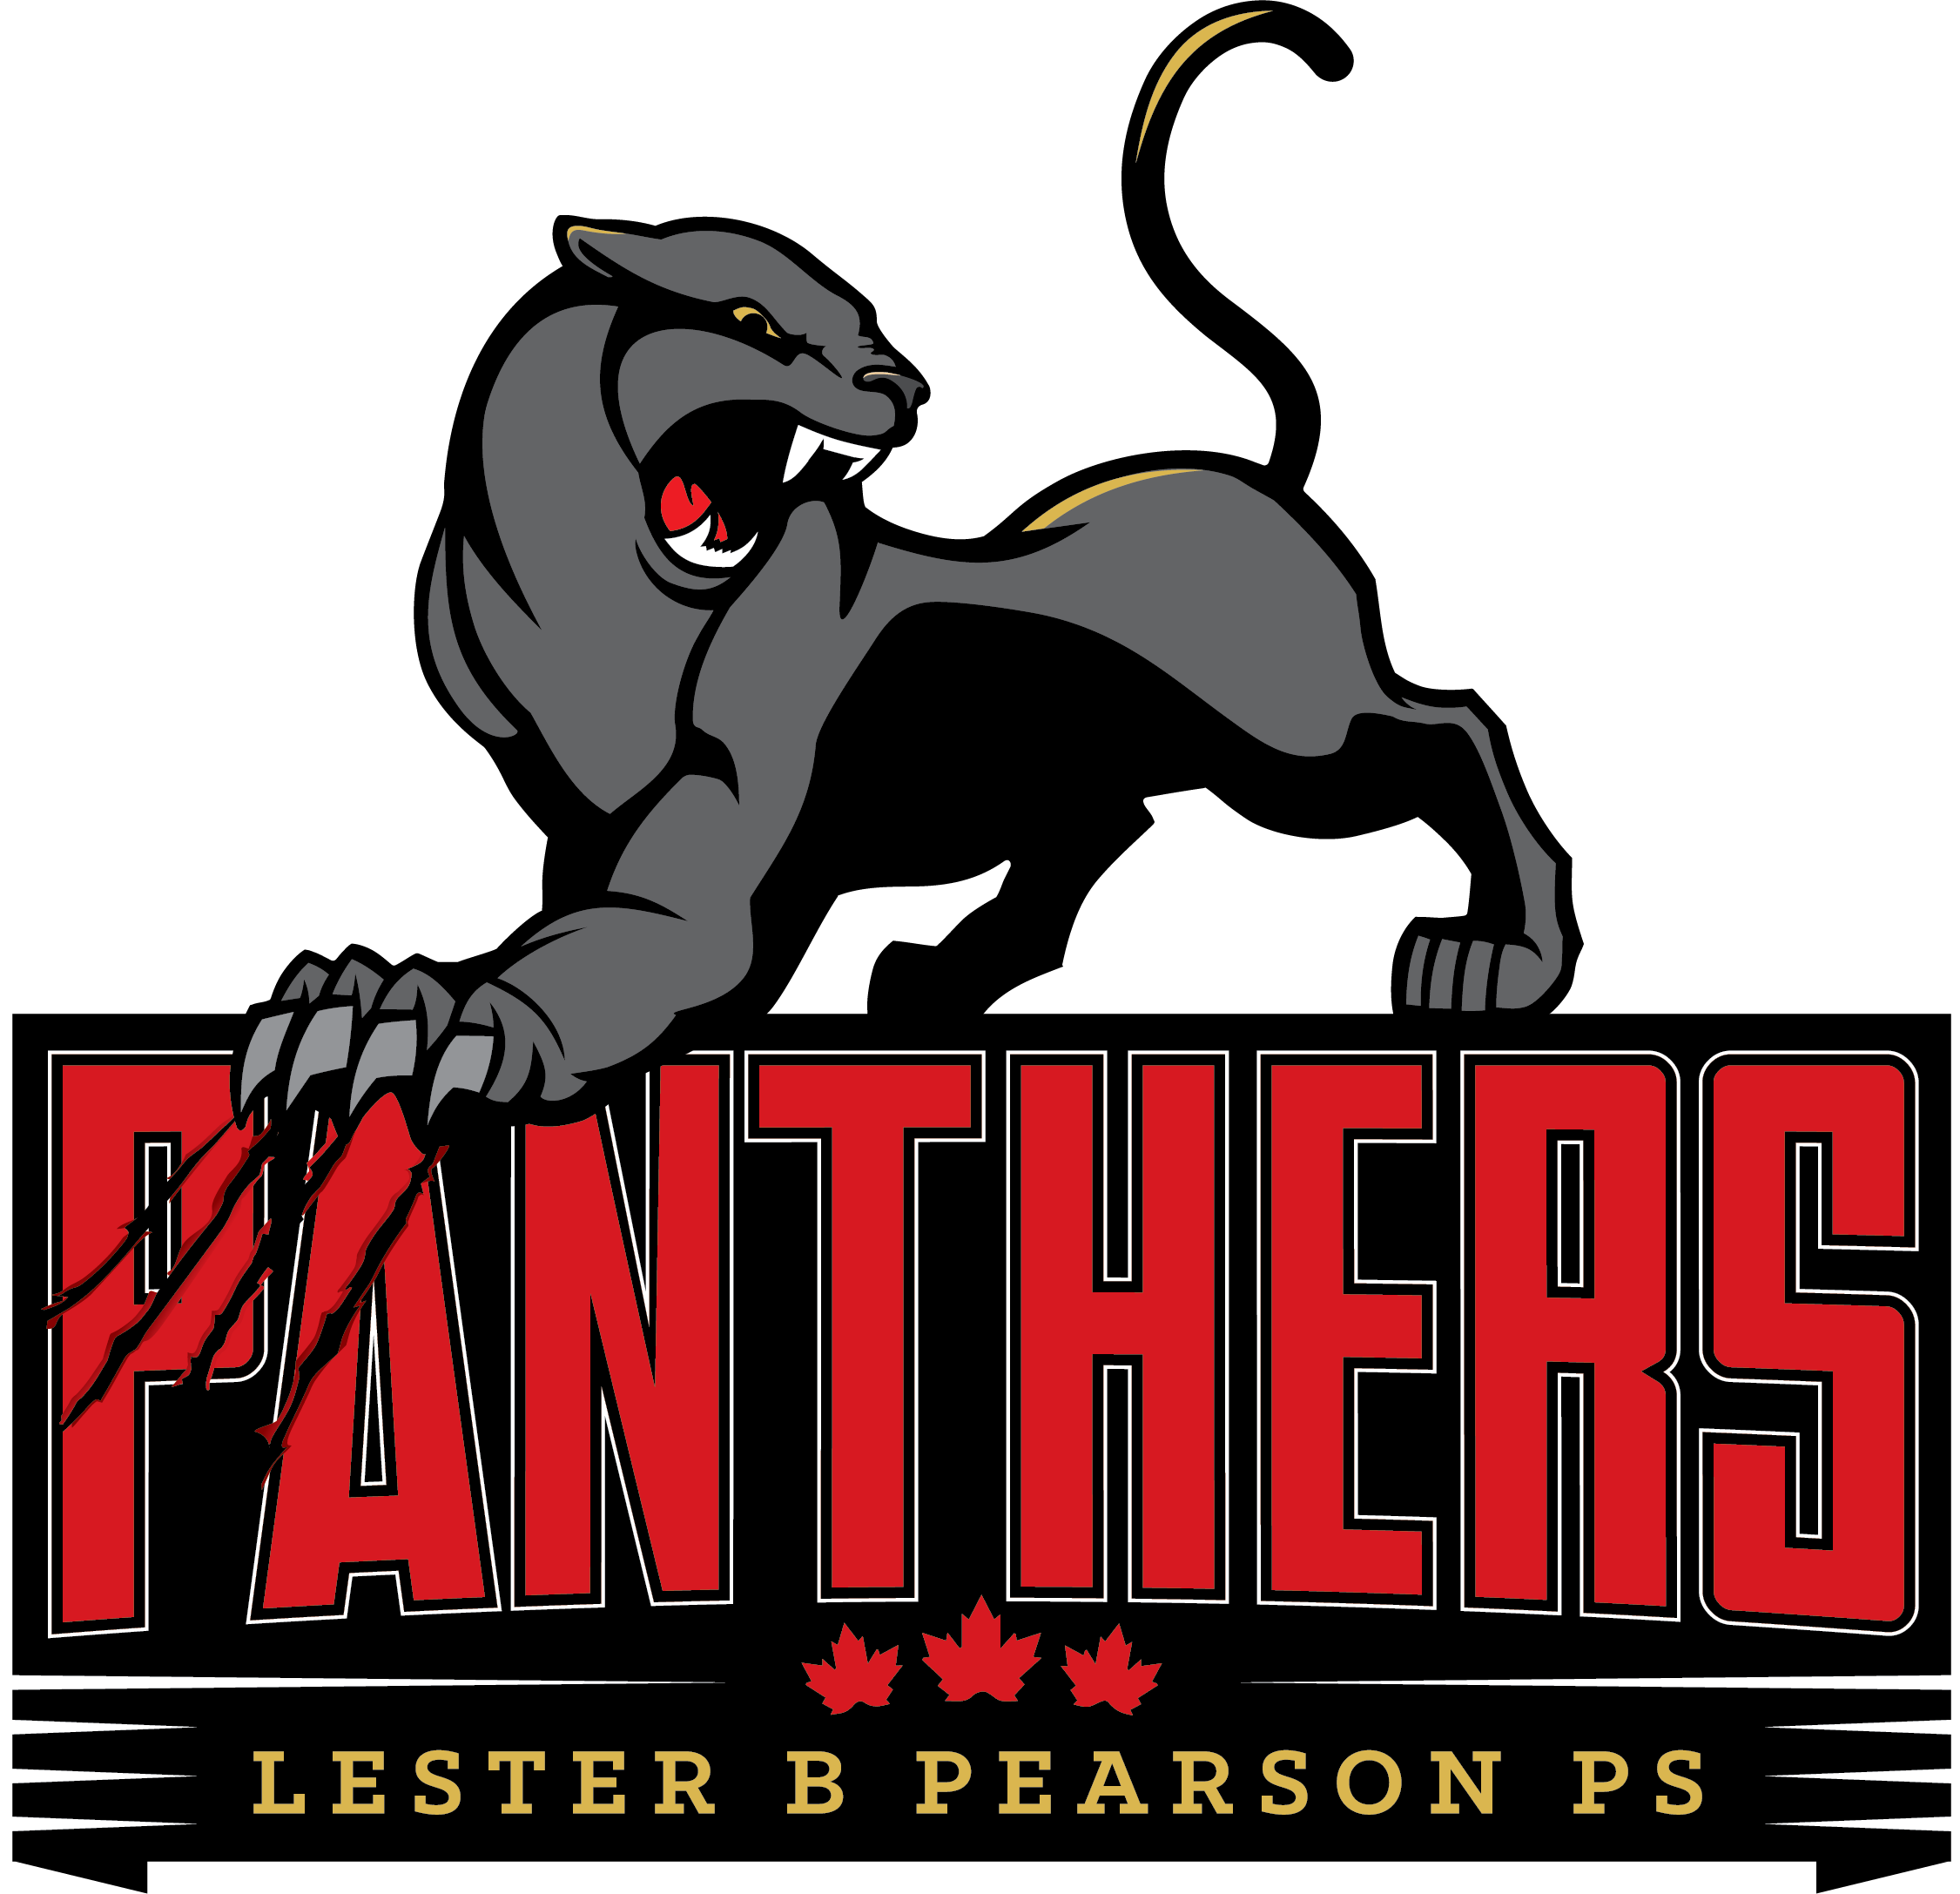 Lester B. Pearson Public School logo